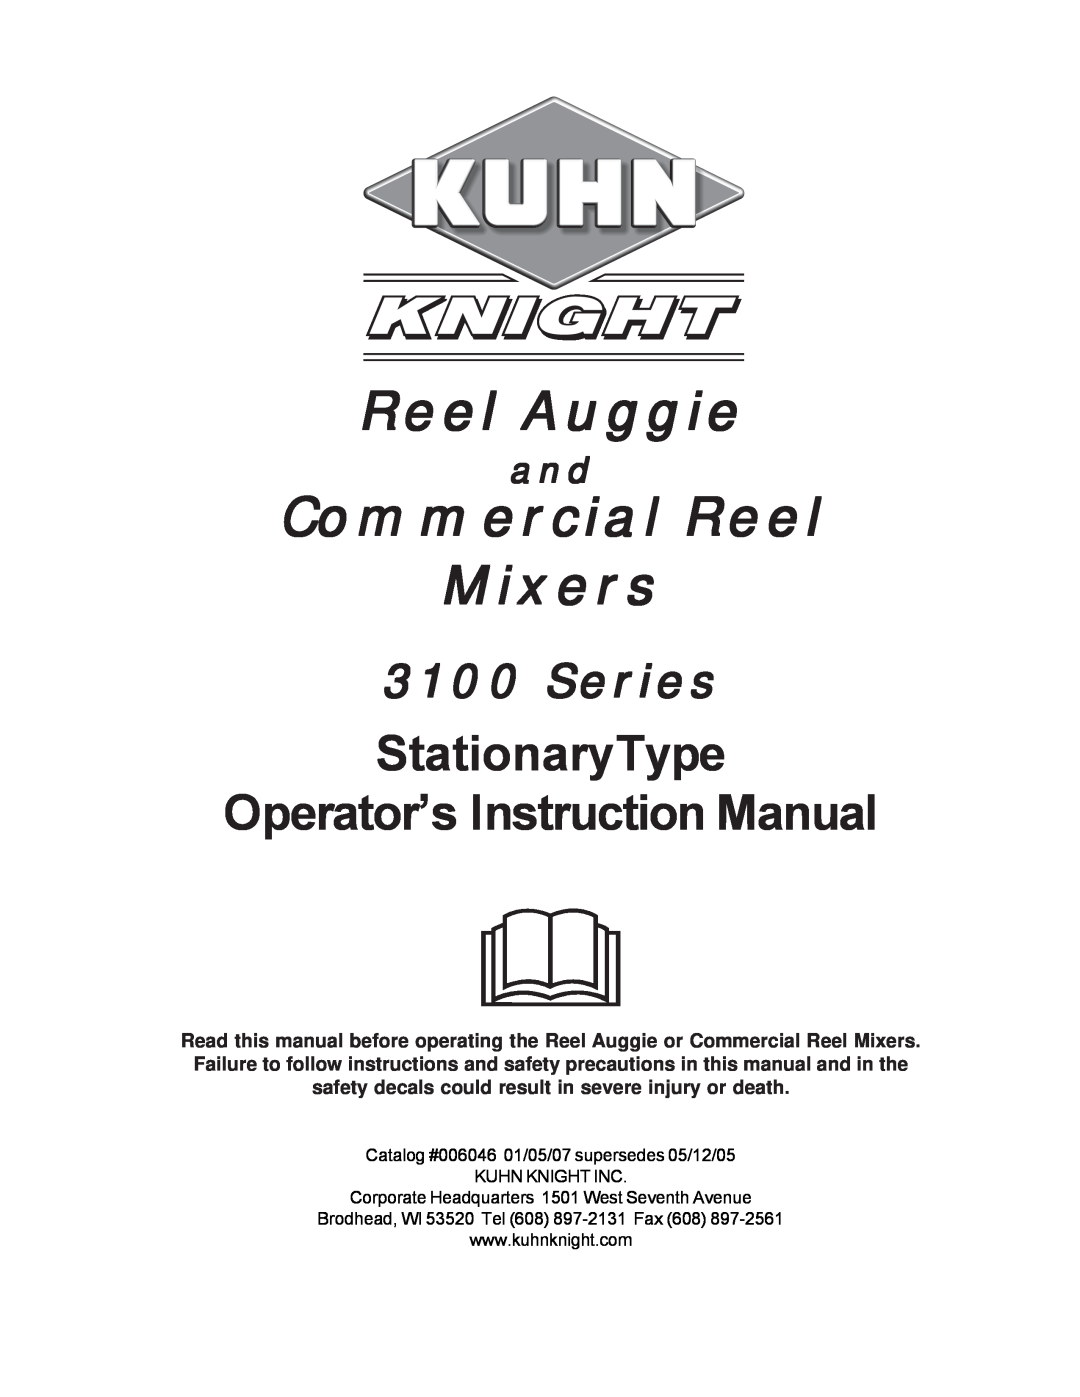 Kuhn Rikon 3100 instruction manual Reel Auggie, Commercial Reel Mixers, Series 